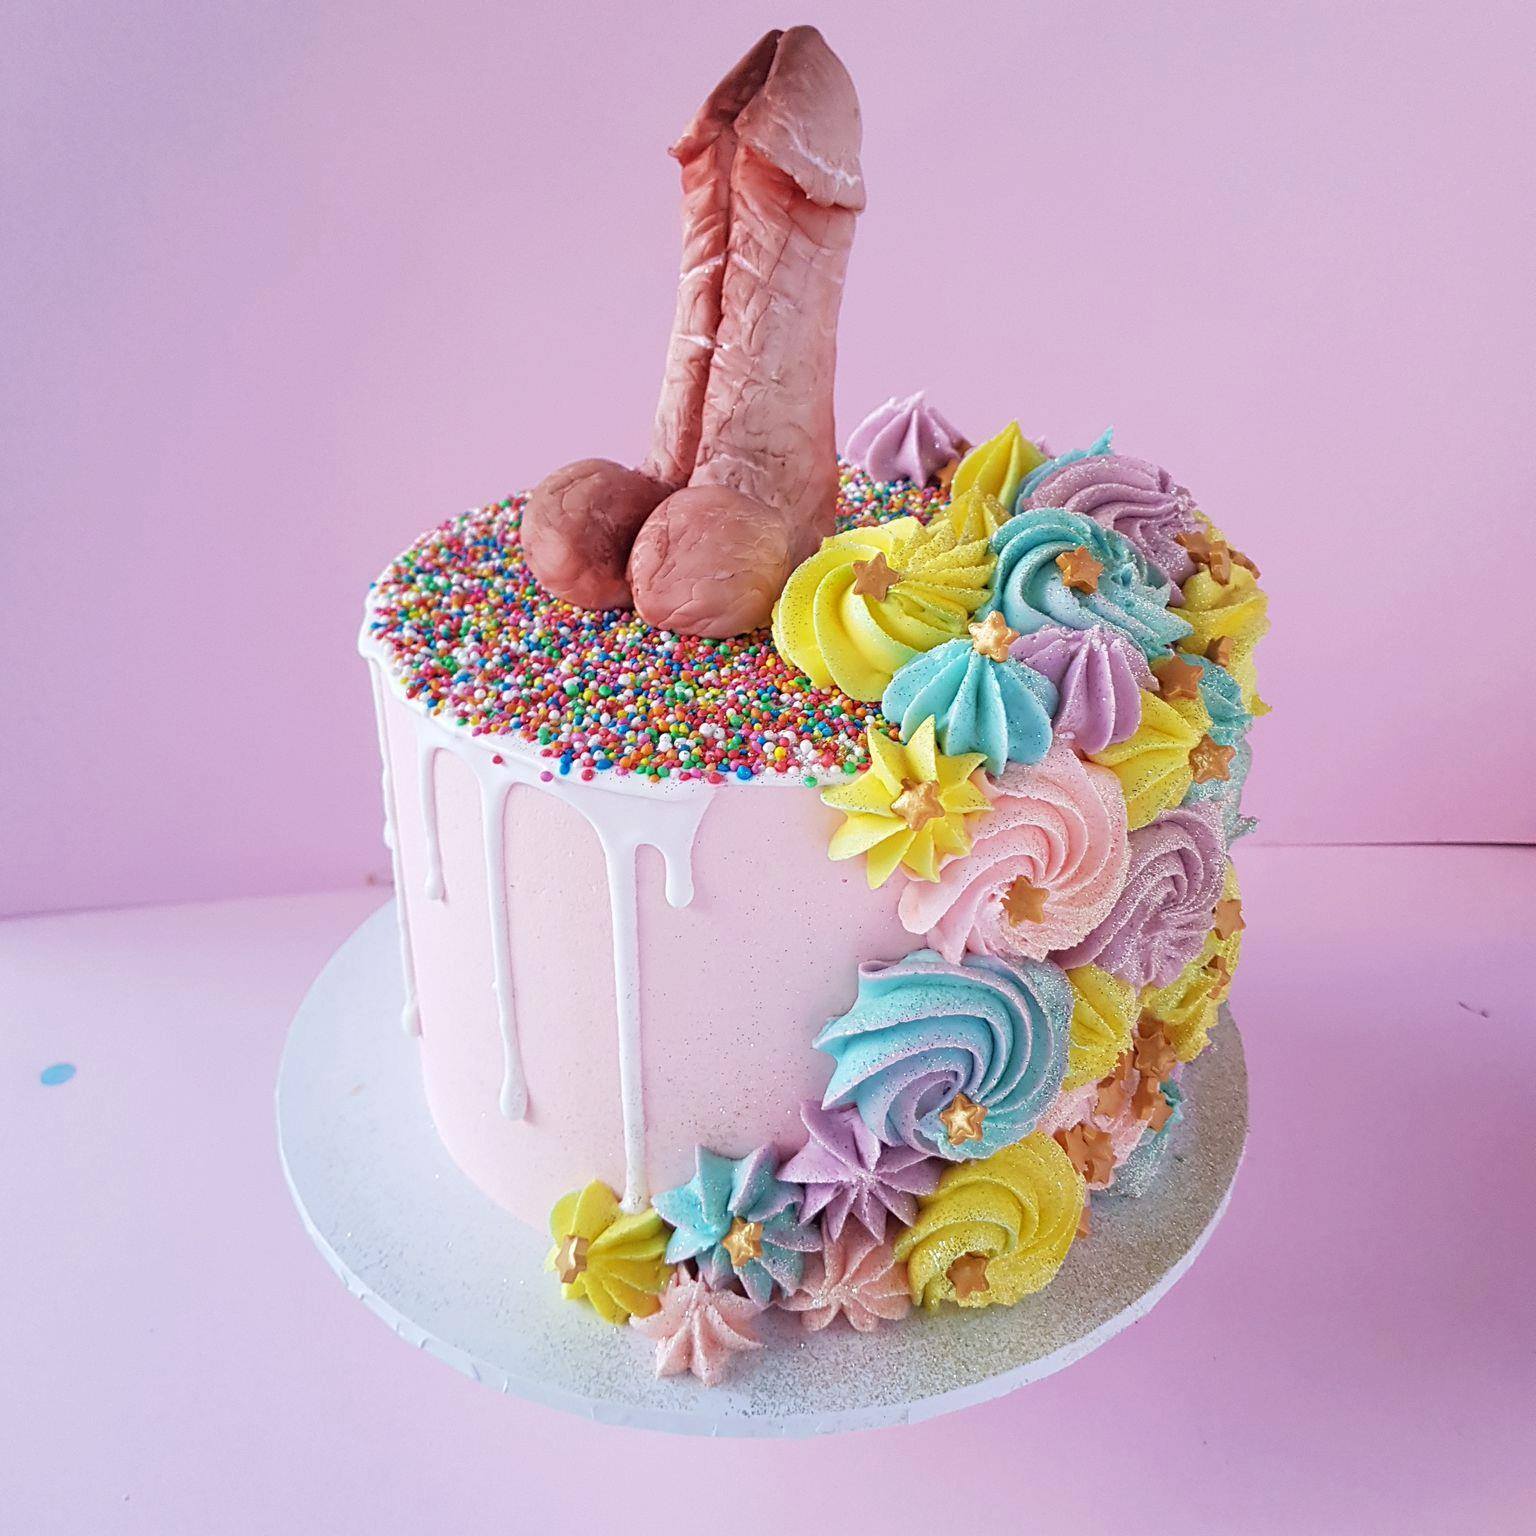 Penis Cake, How to make Penis Cake, Dick Cake